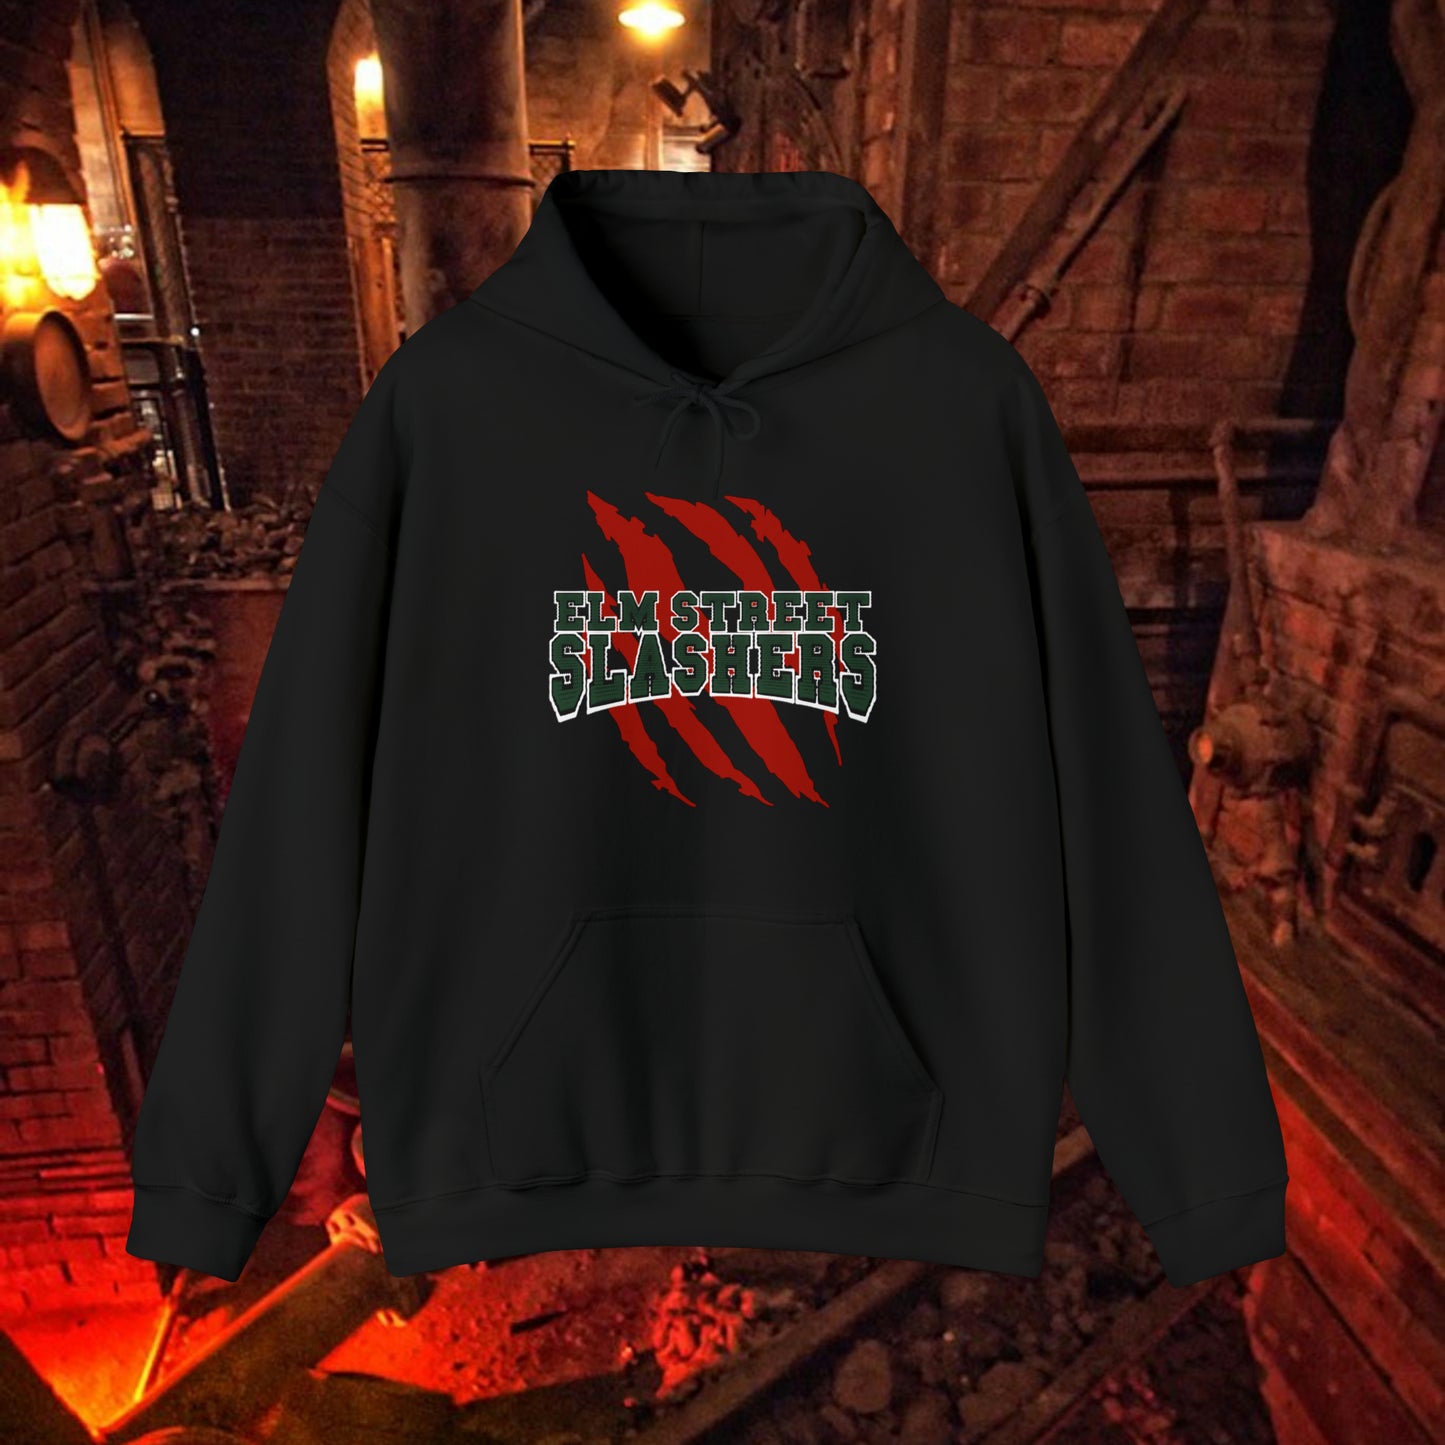 Elm Street Slashers Hooded Sweatshirt